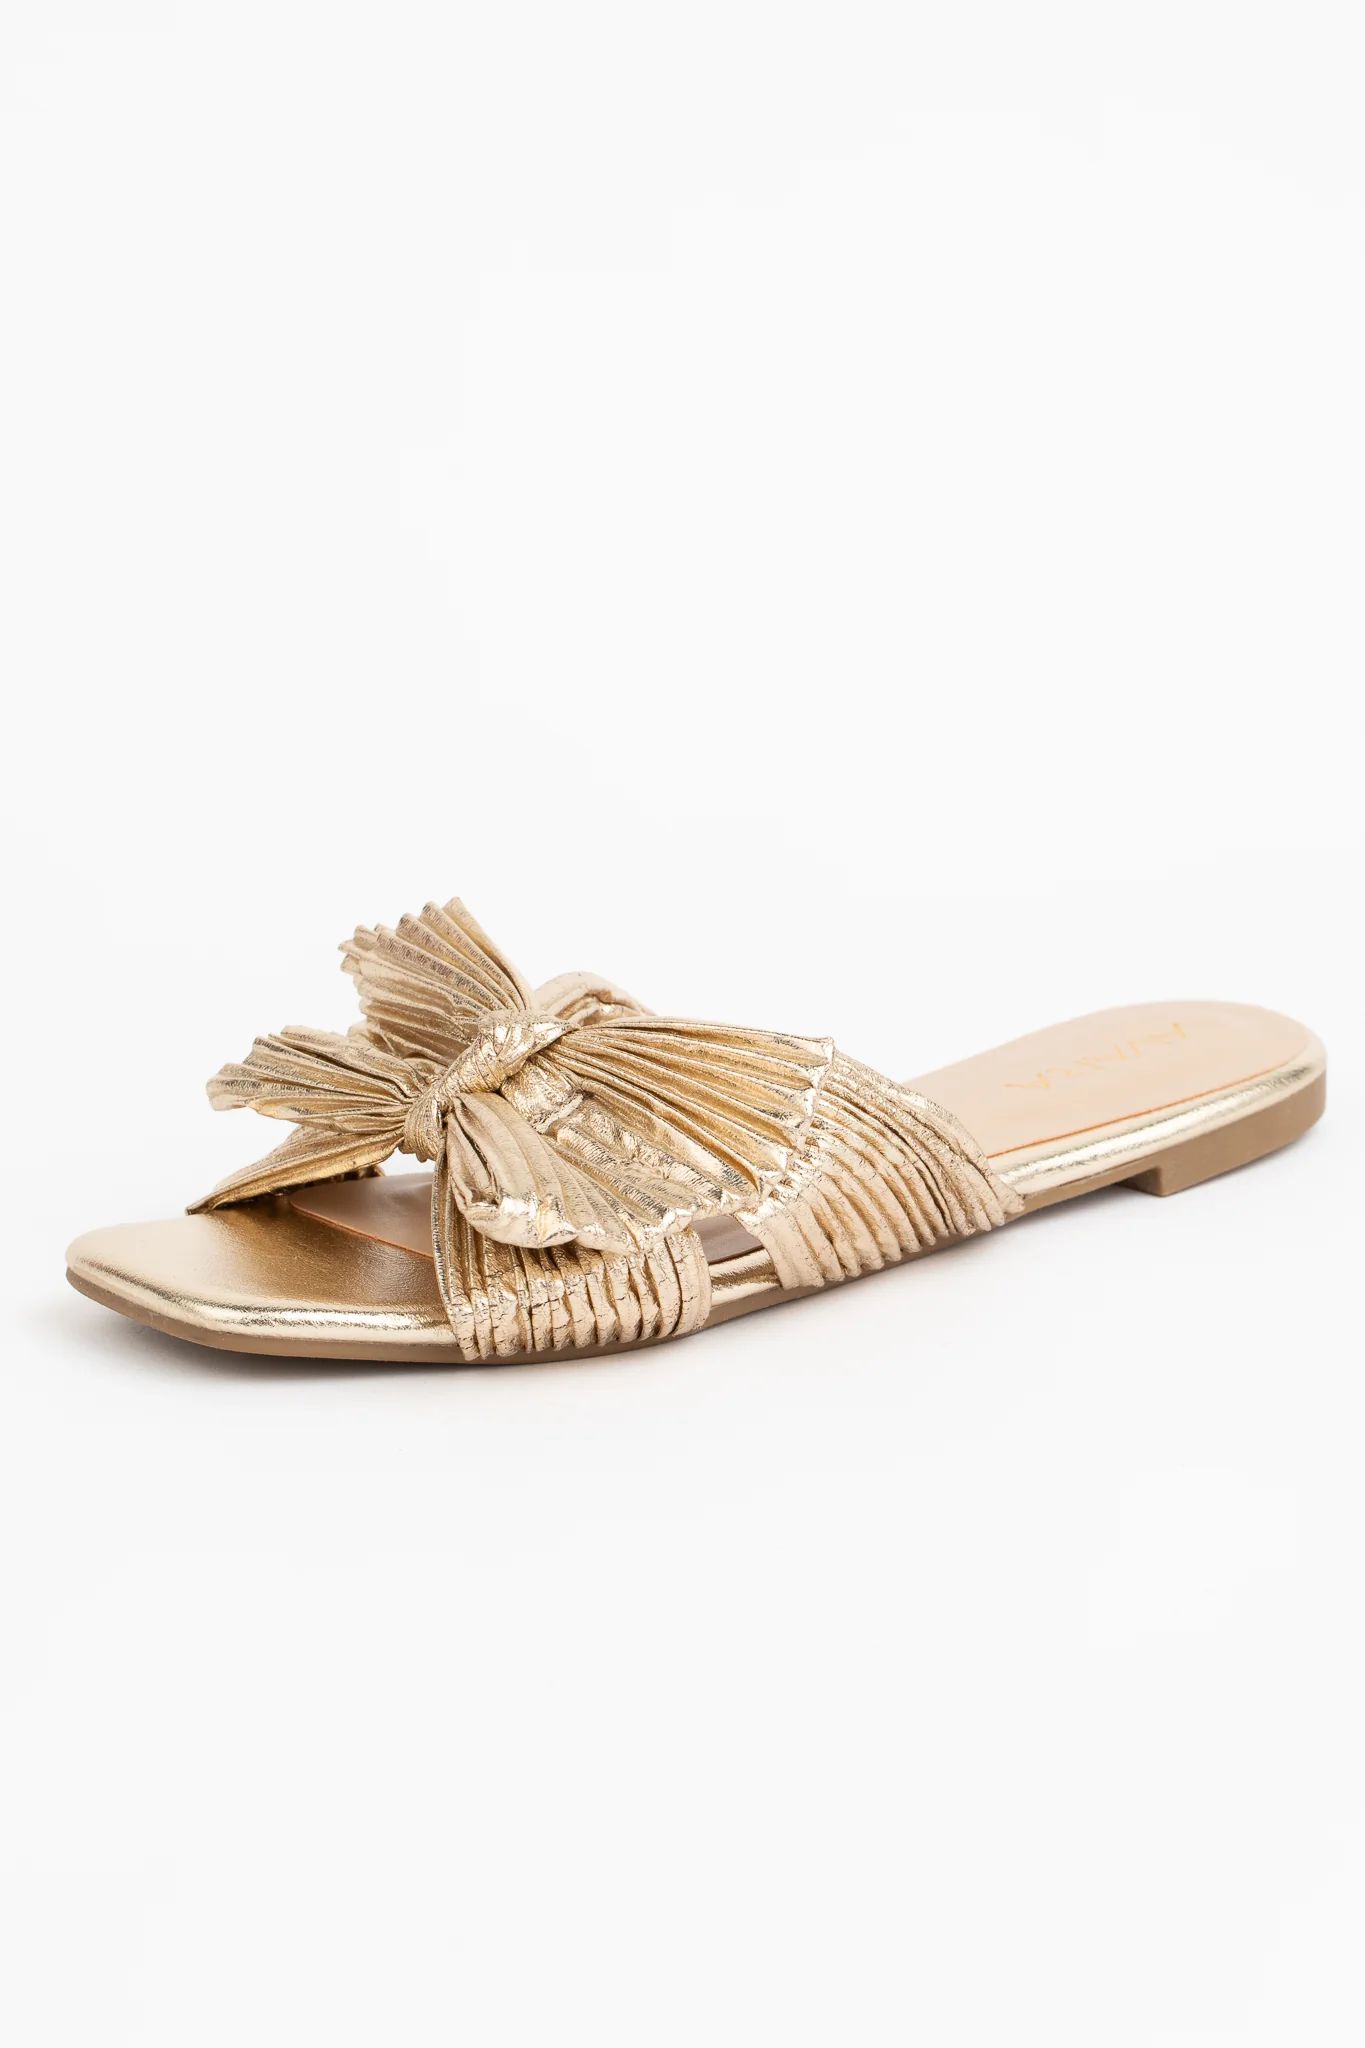 Ariel Sandals - Gold Bow Slip On Sandals | Avara